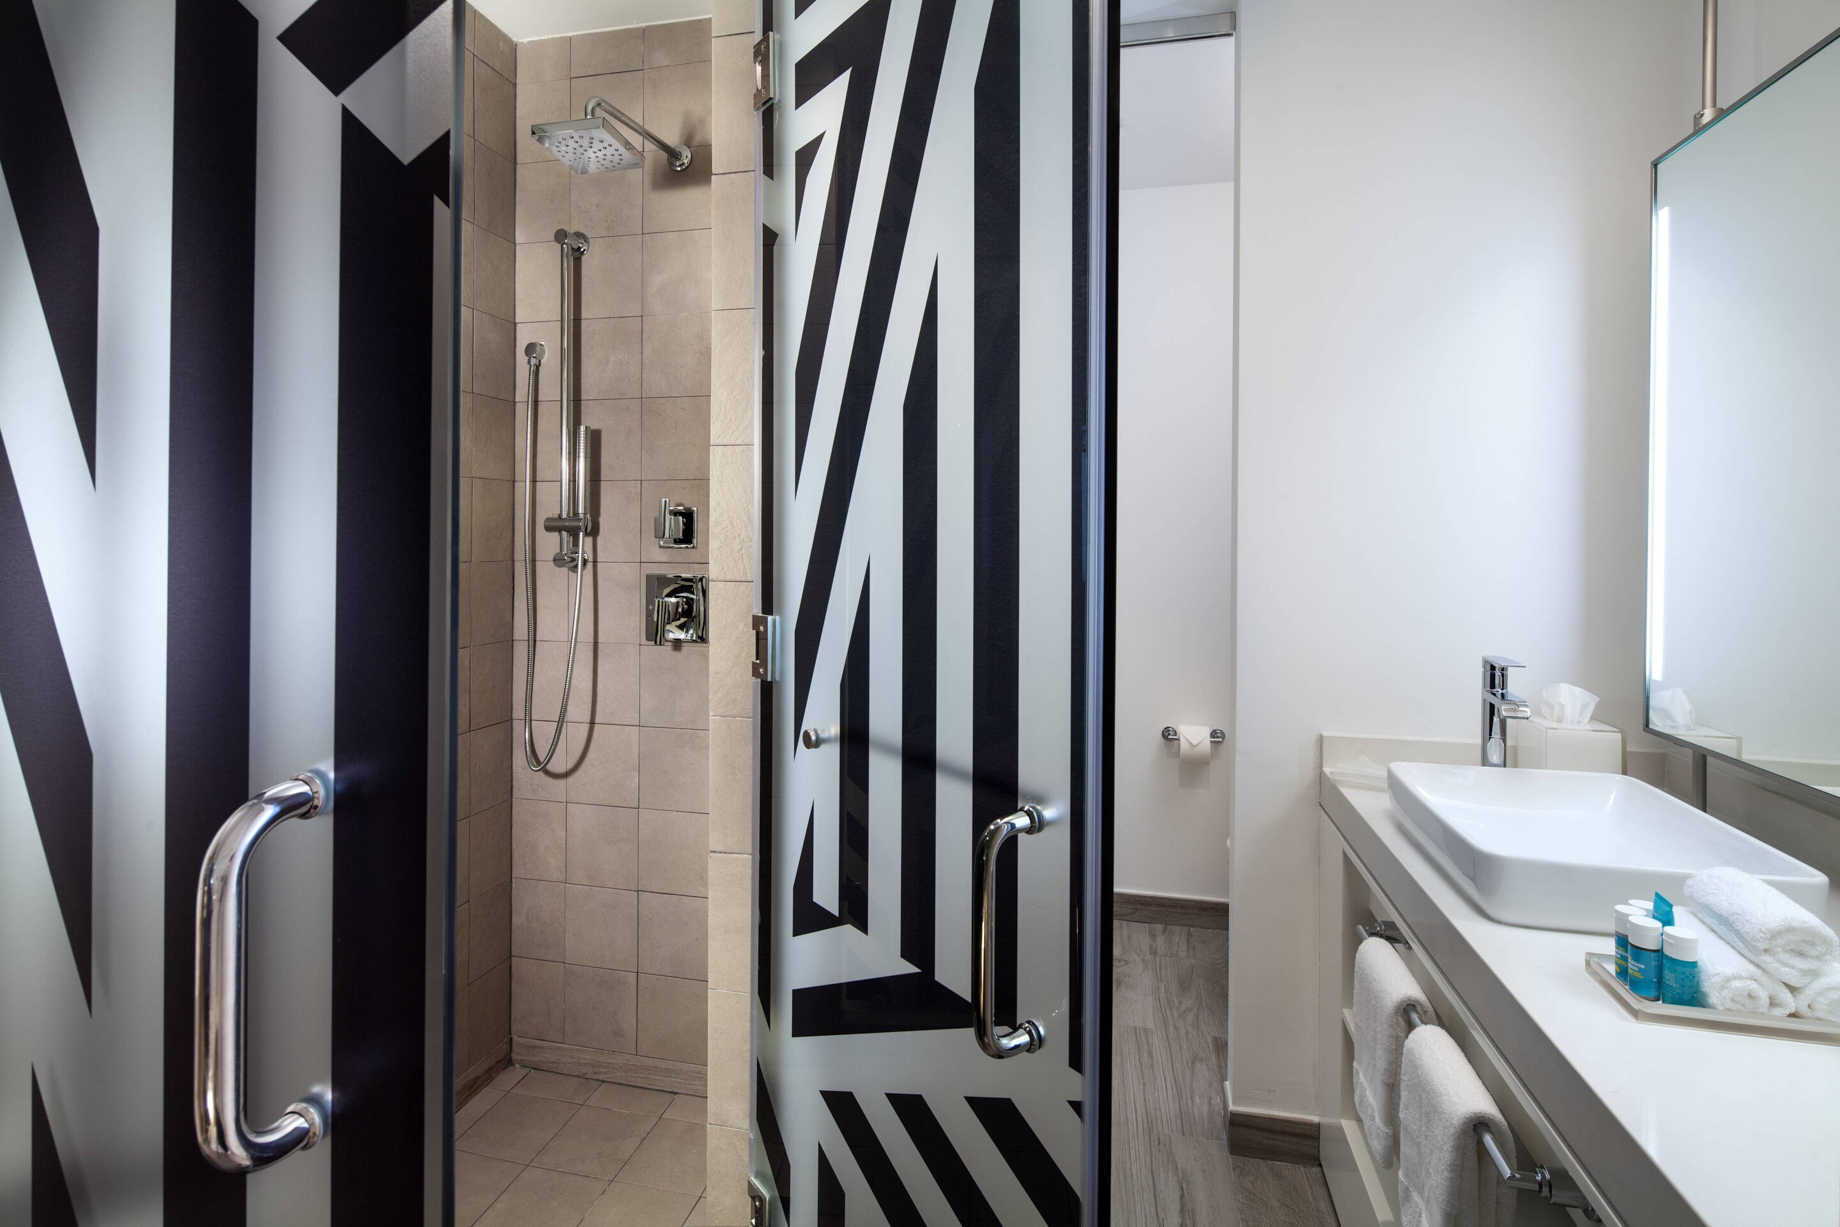 W Panama Hotel – Panama City, Panama – Guest Bathroom Shower